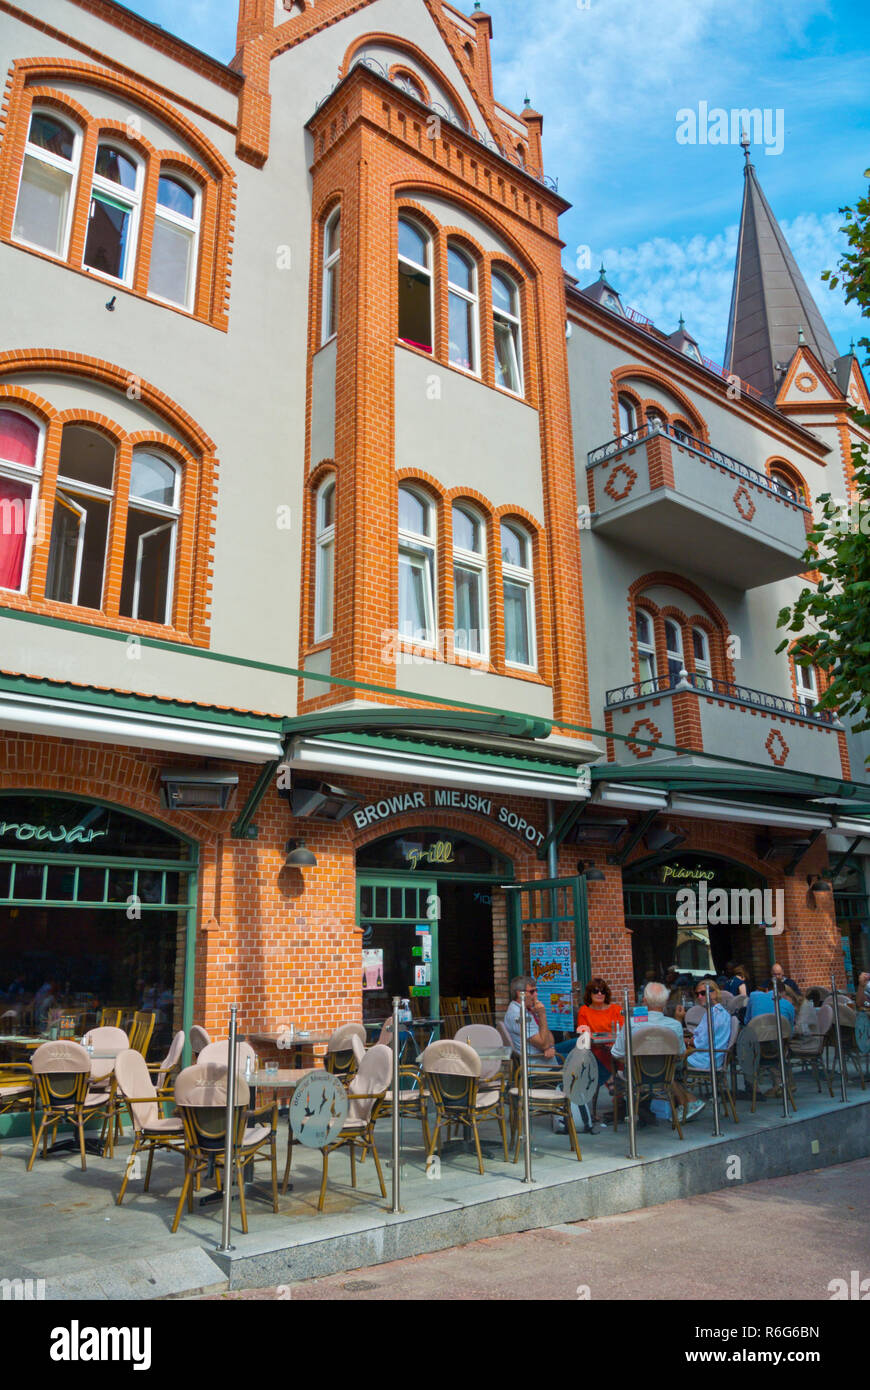 Browar Miejski Sopot, brewery restaurant, Bohaterow Monte Cassino, Sopot, Poland Stock Photo